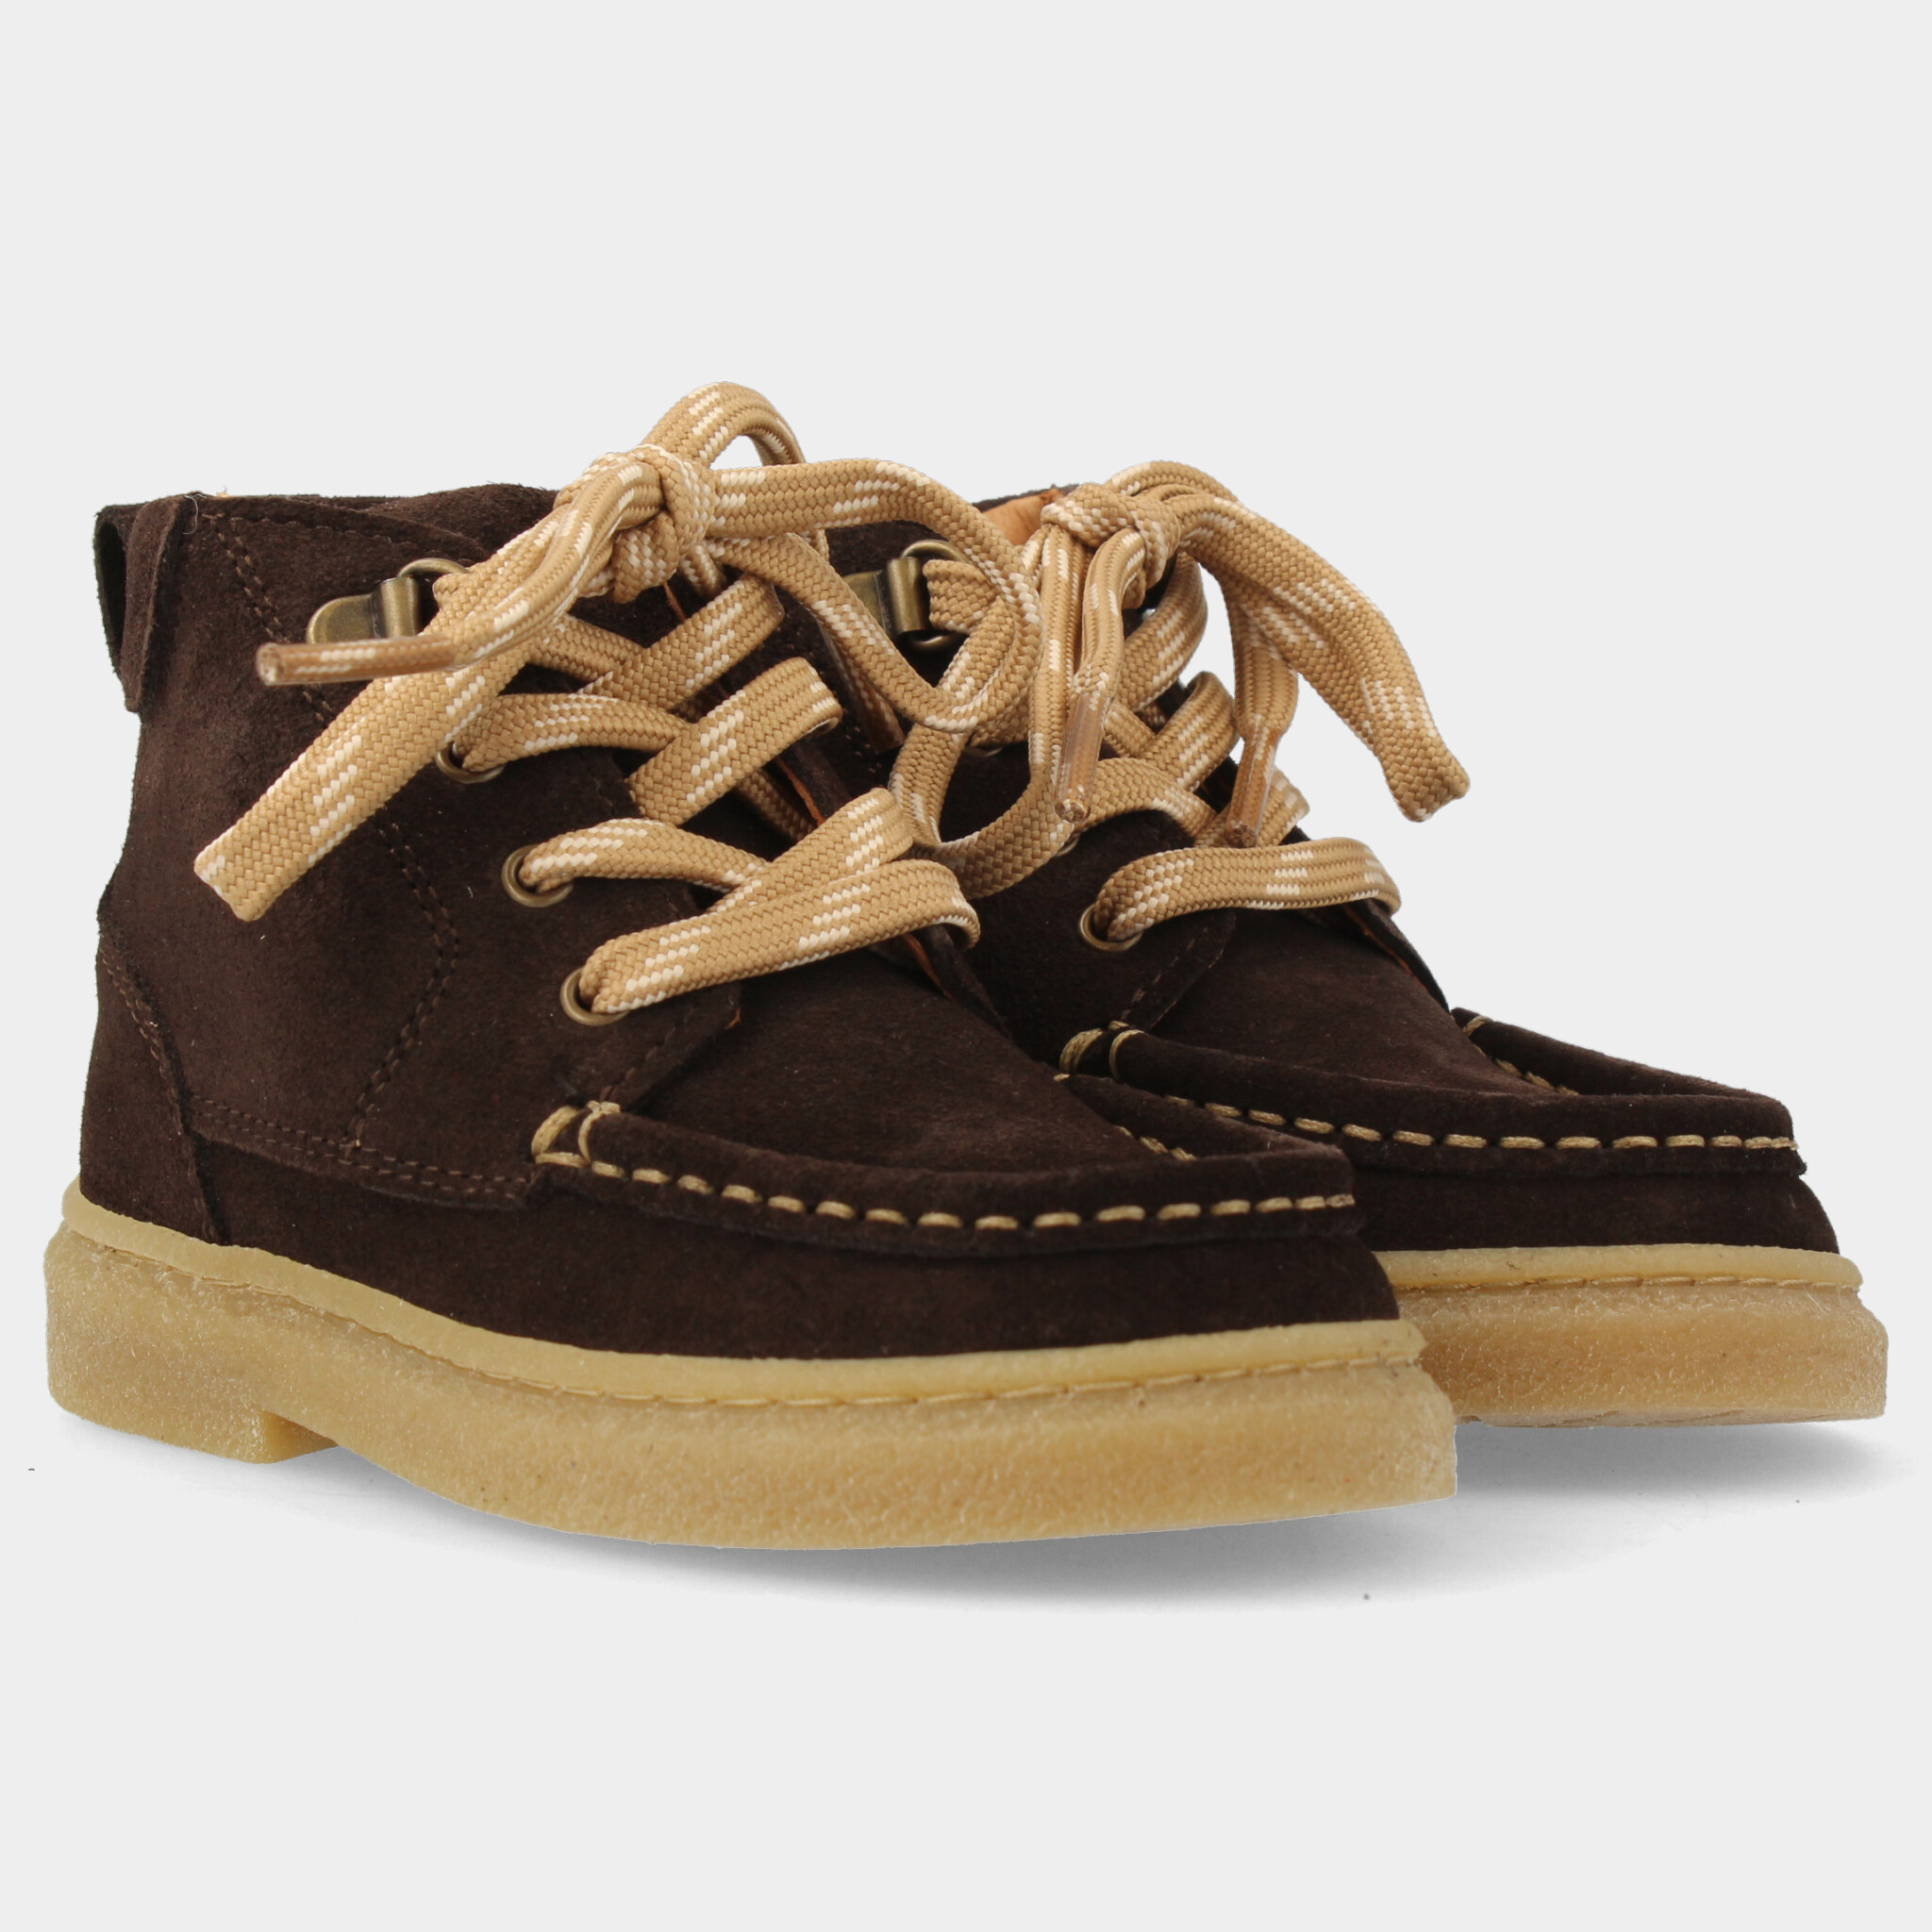 Bruine boots | 46190